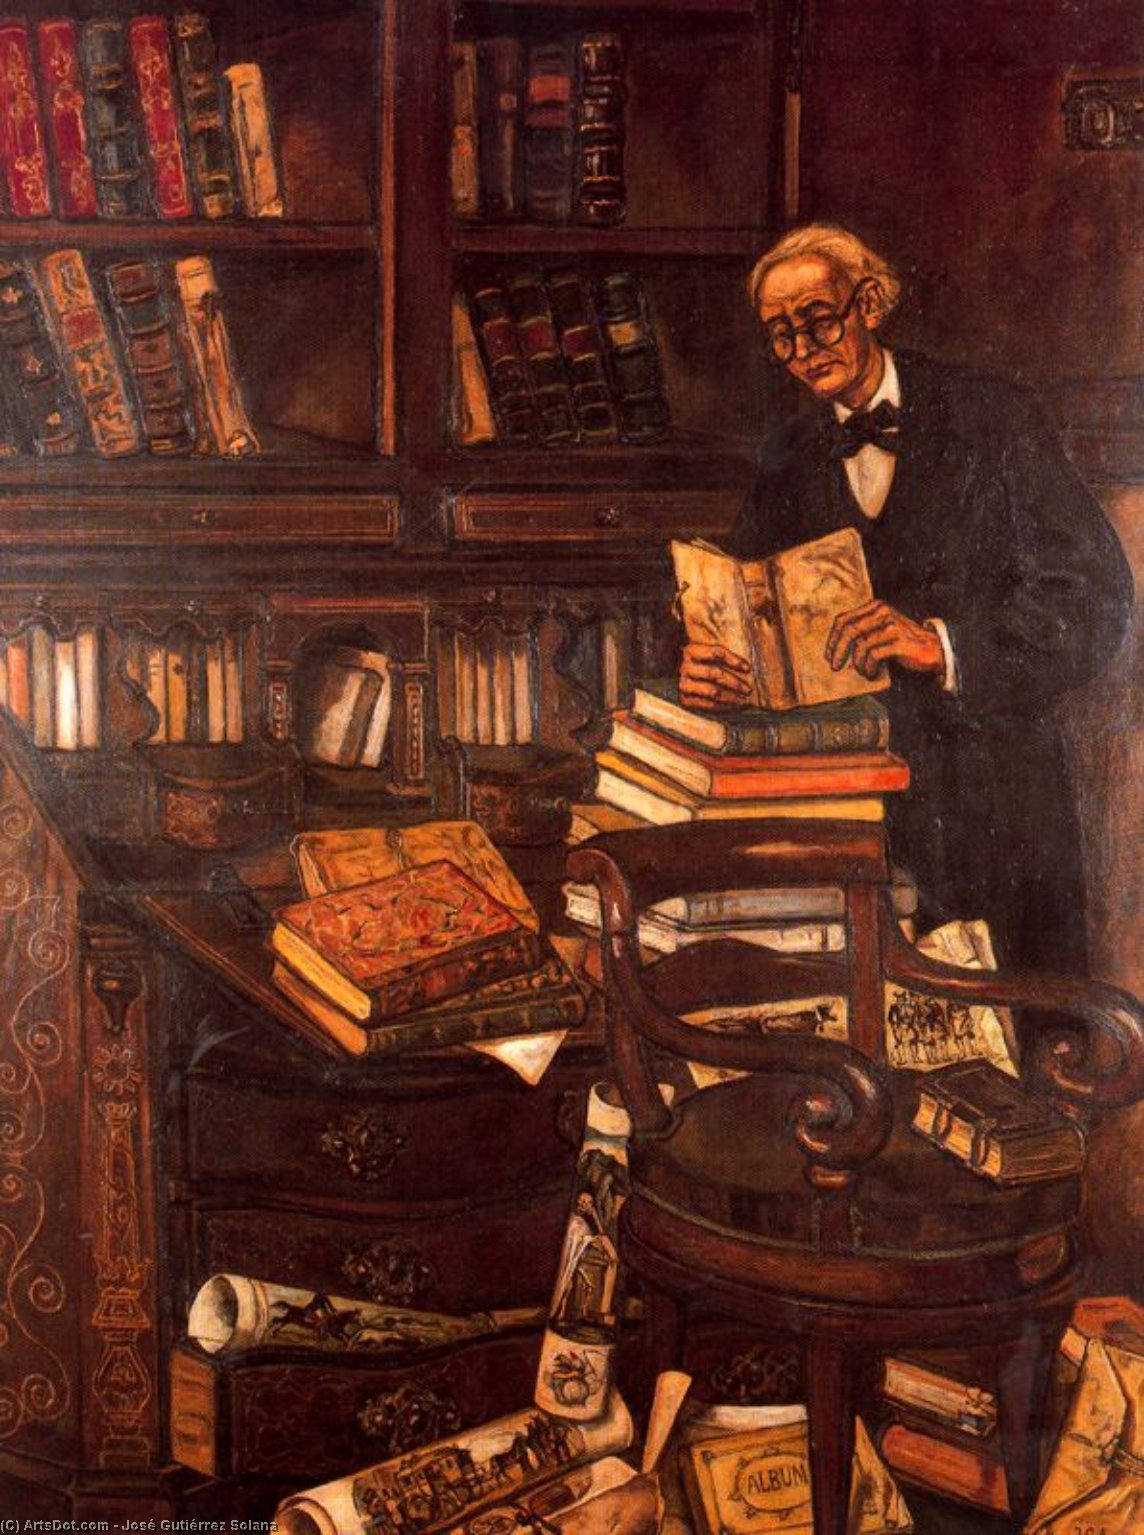 Писатели картин 19 века. Хосе Гутьеррес Солана библиофил. Библиотека картина художника 19 век.